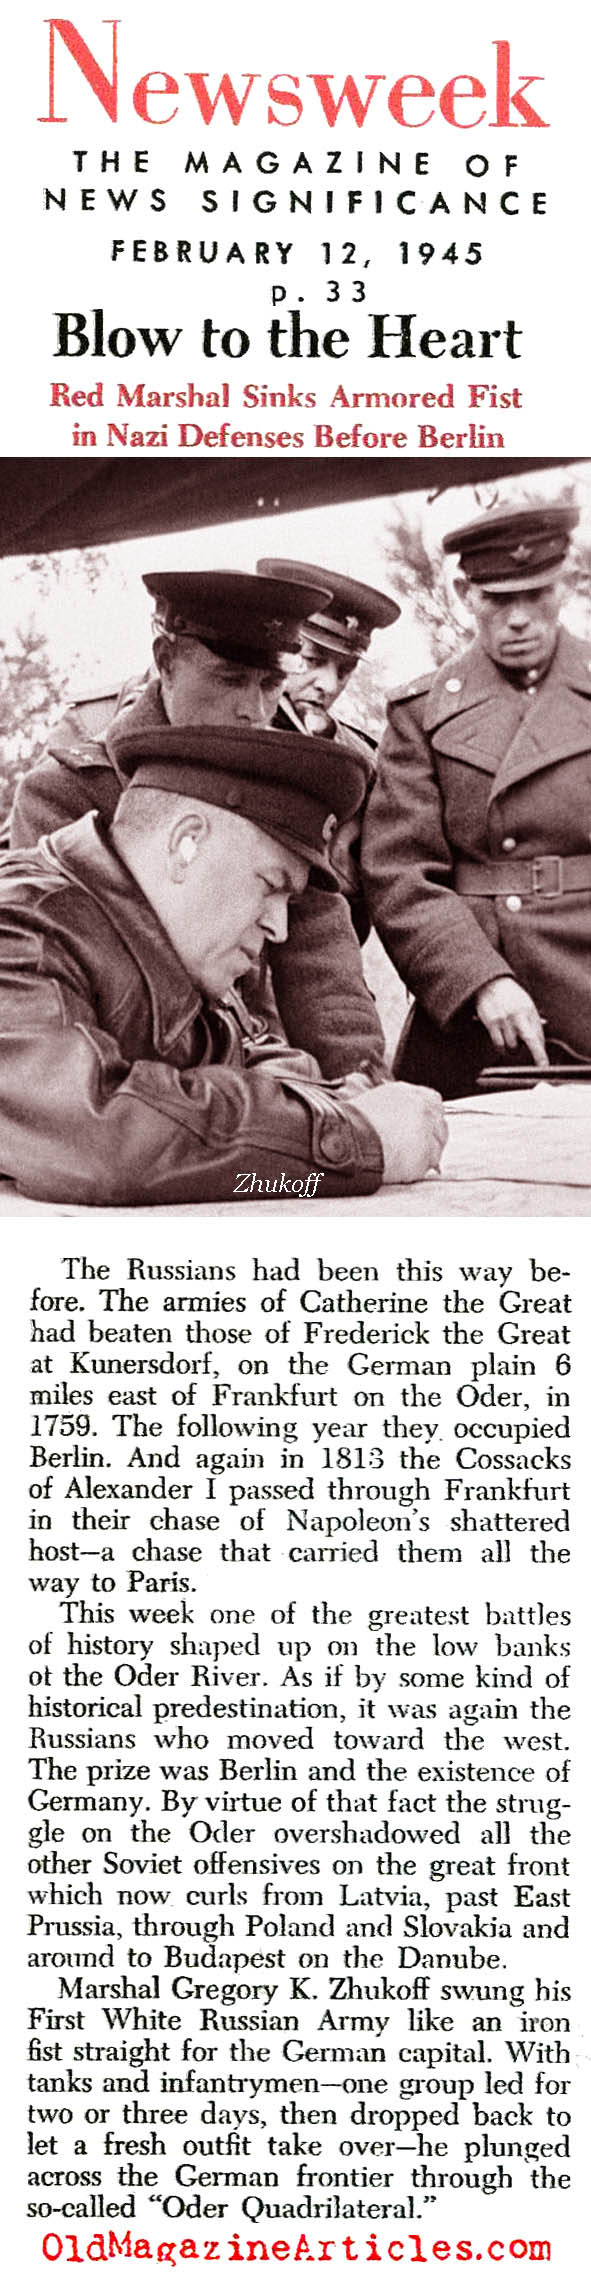 The Drive On Berlin (Newsweek Magazine, 1945)